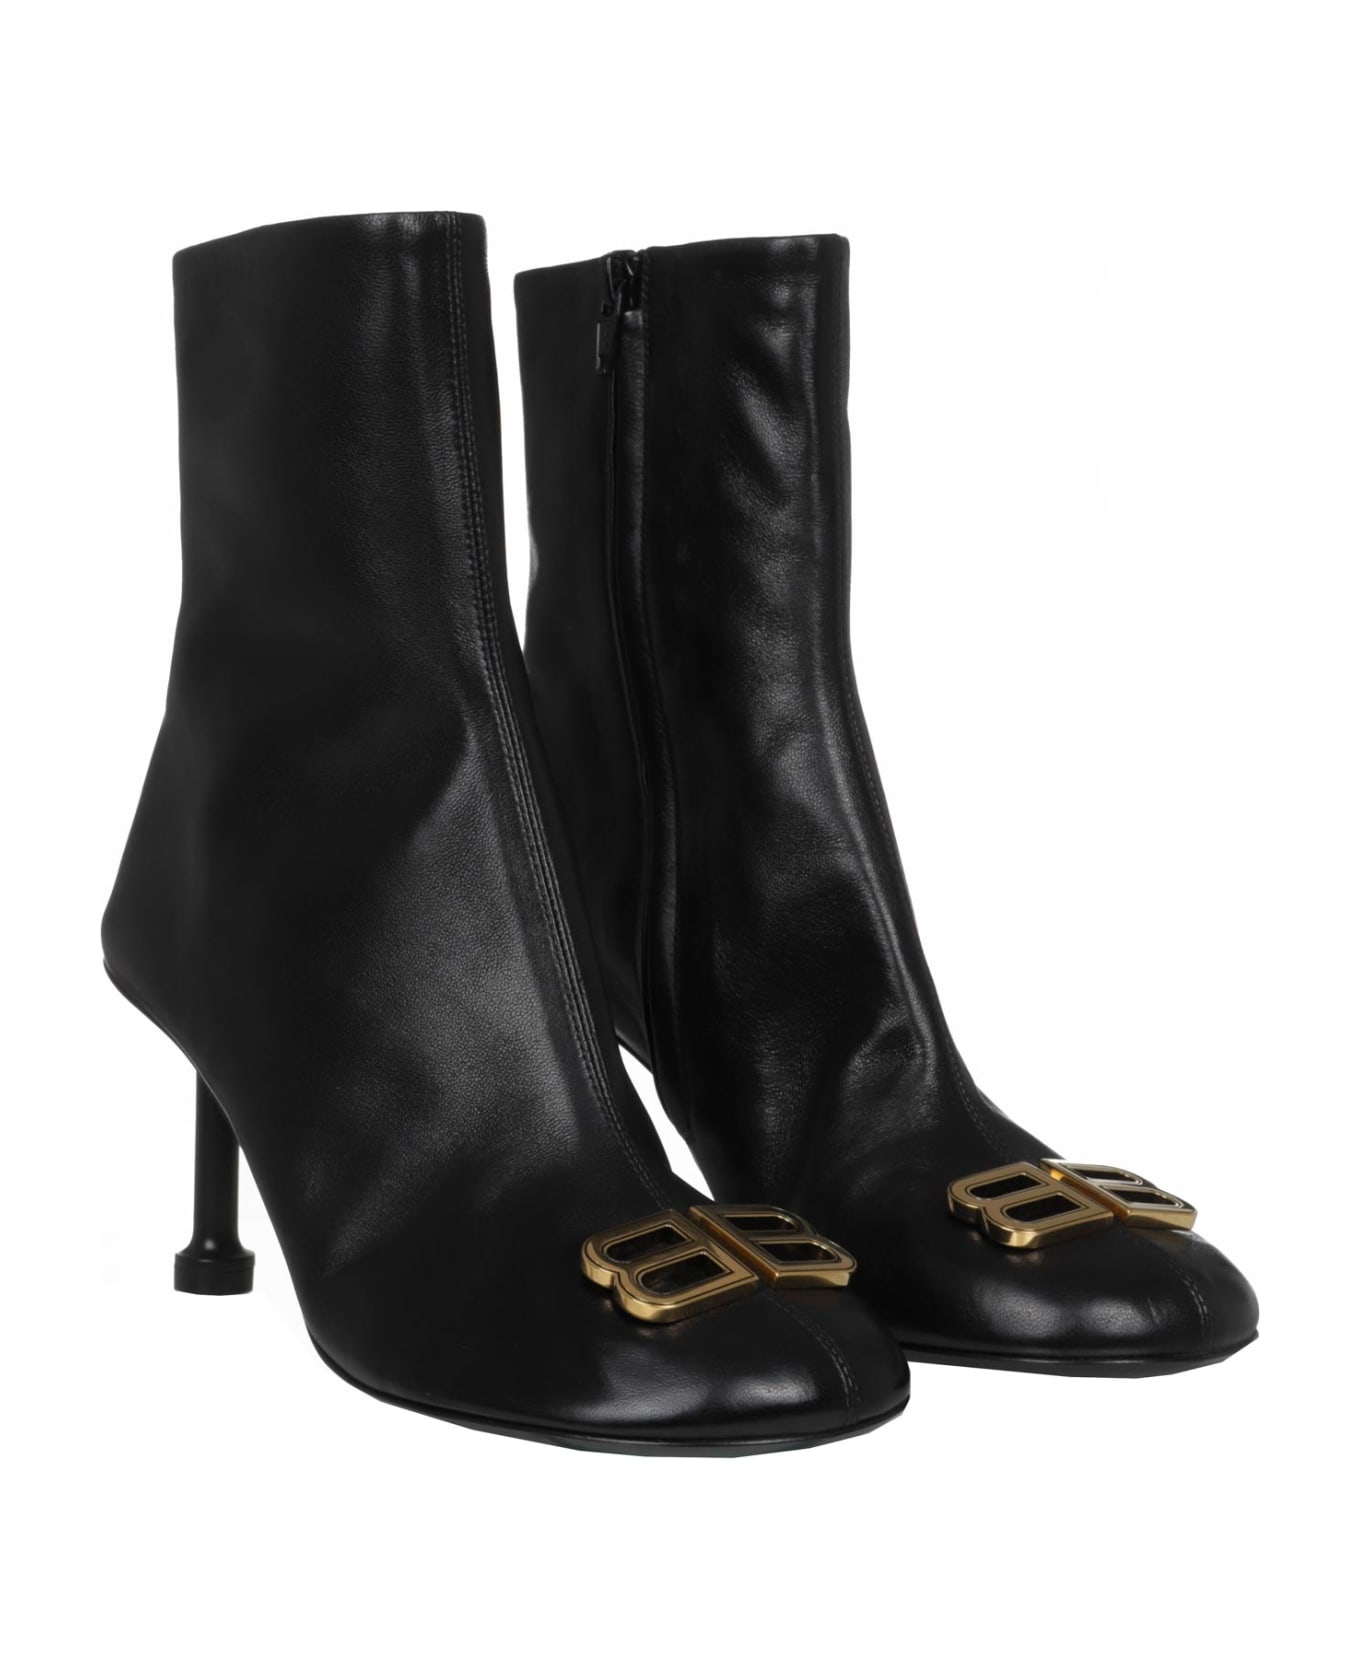 Balenciaga High Heels Ankle Boots - black